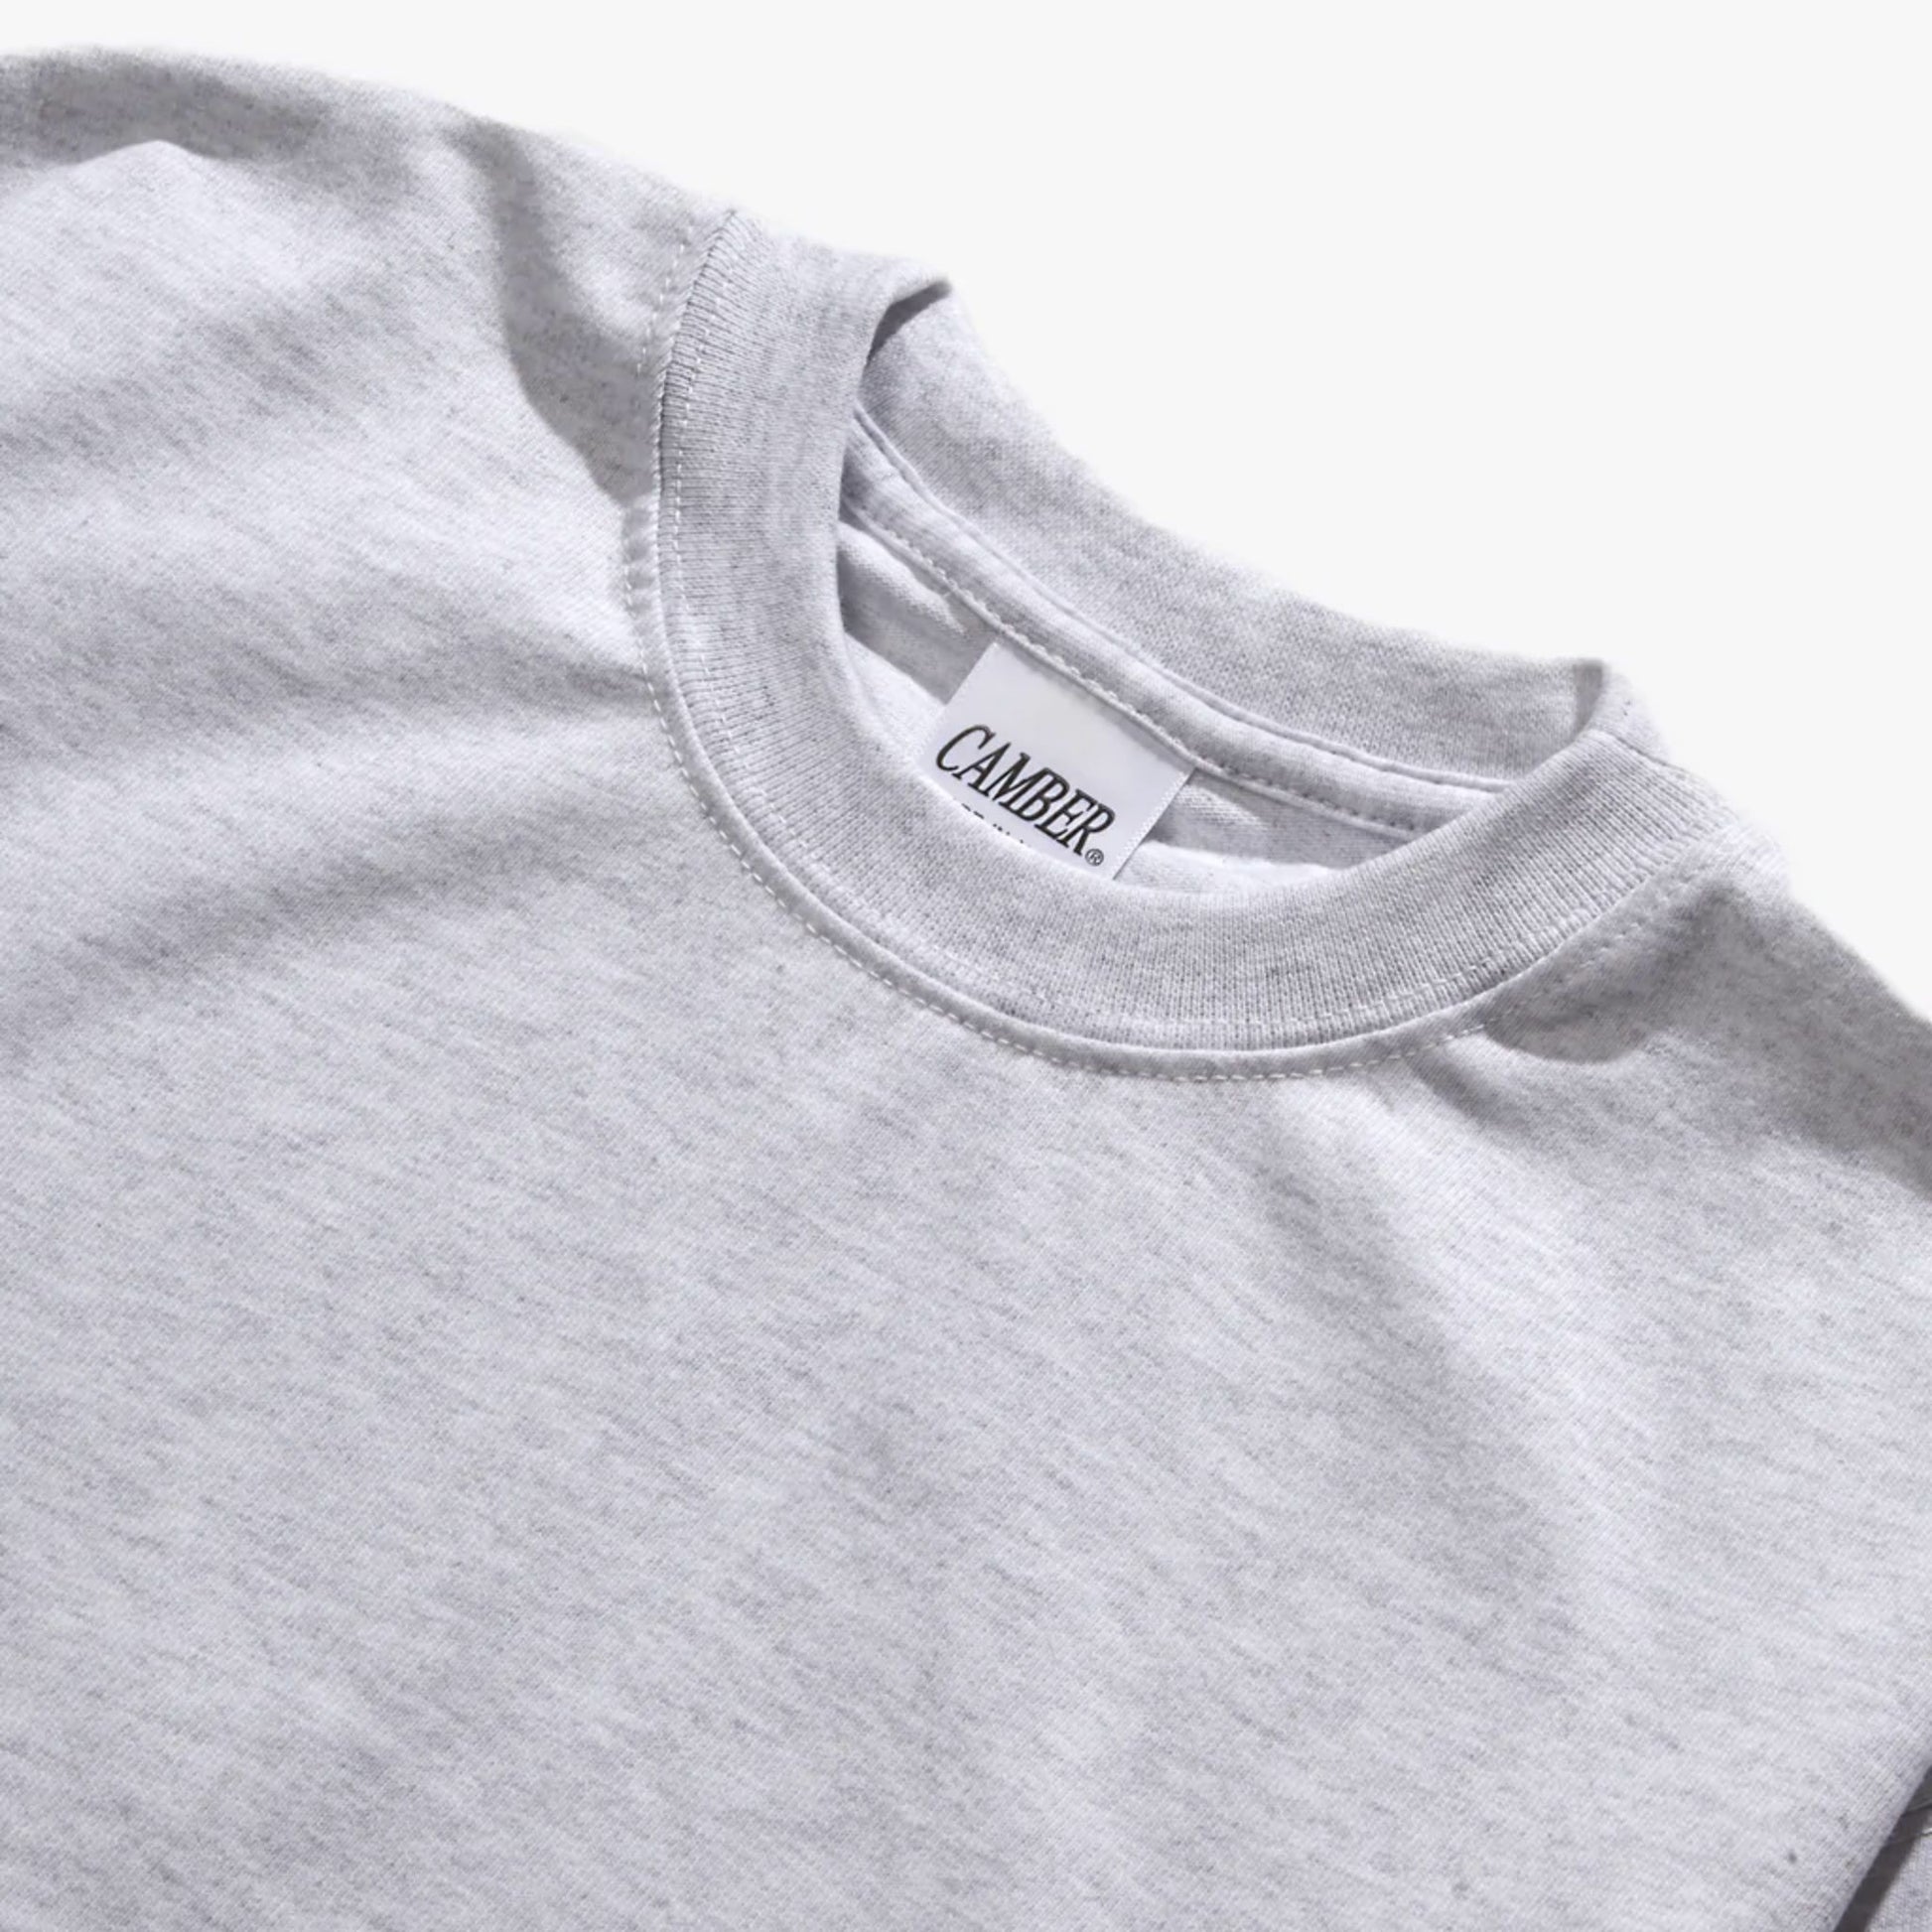 CAMBER USA T-Shirt Grey – 6OZ Finest Binario09 